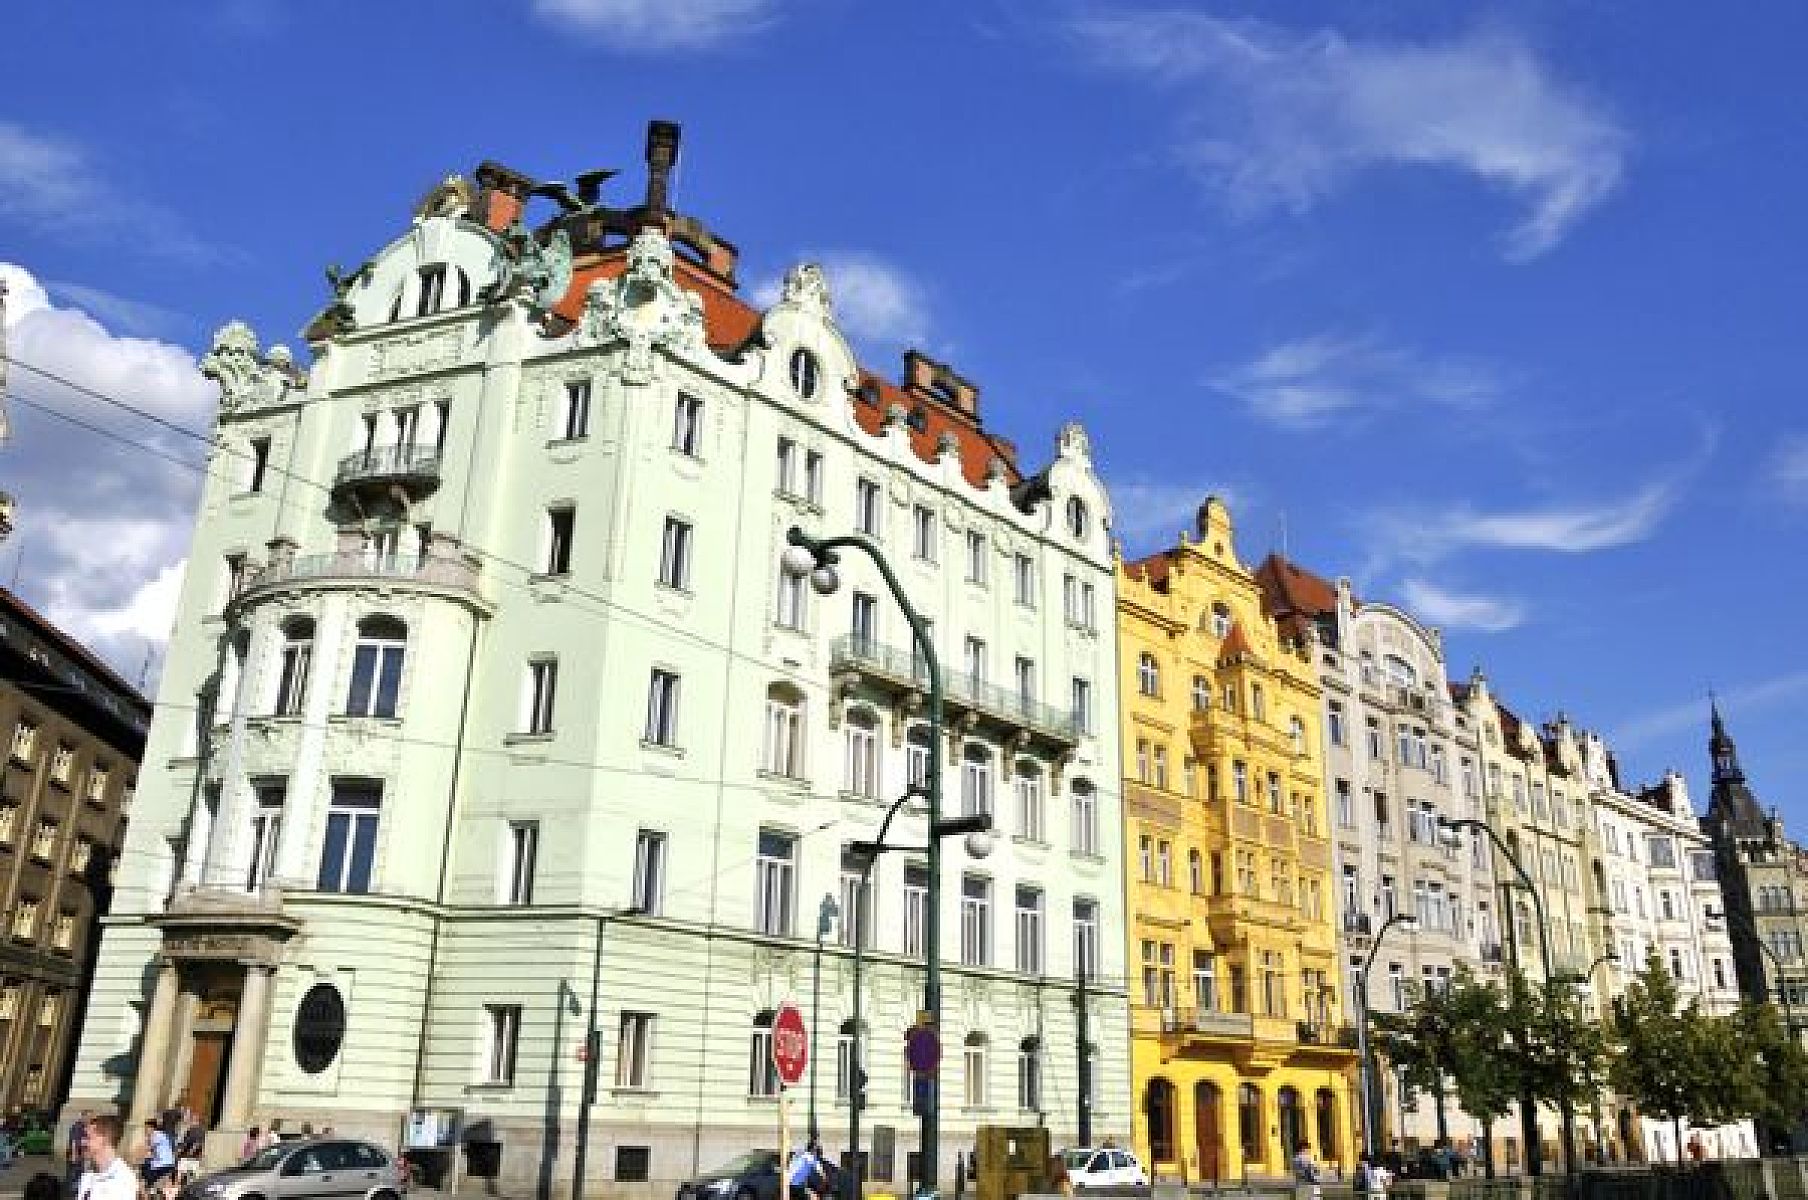 Goethe-Institut in Prague | Prague Stay